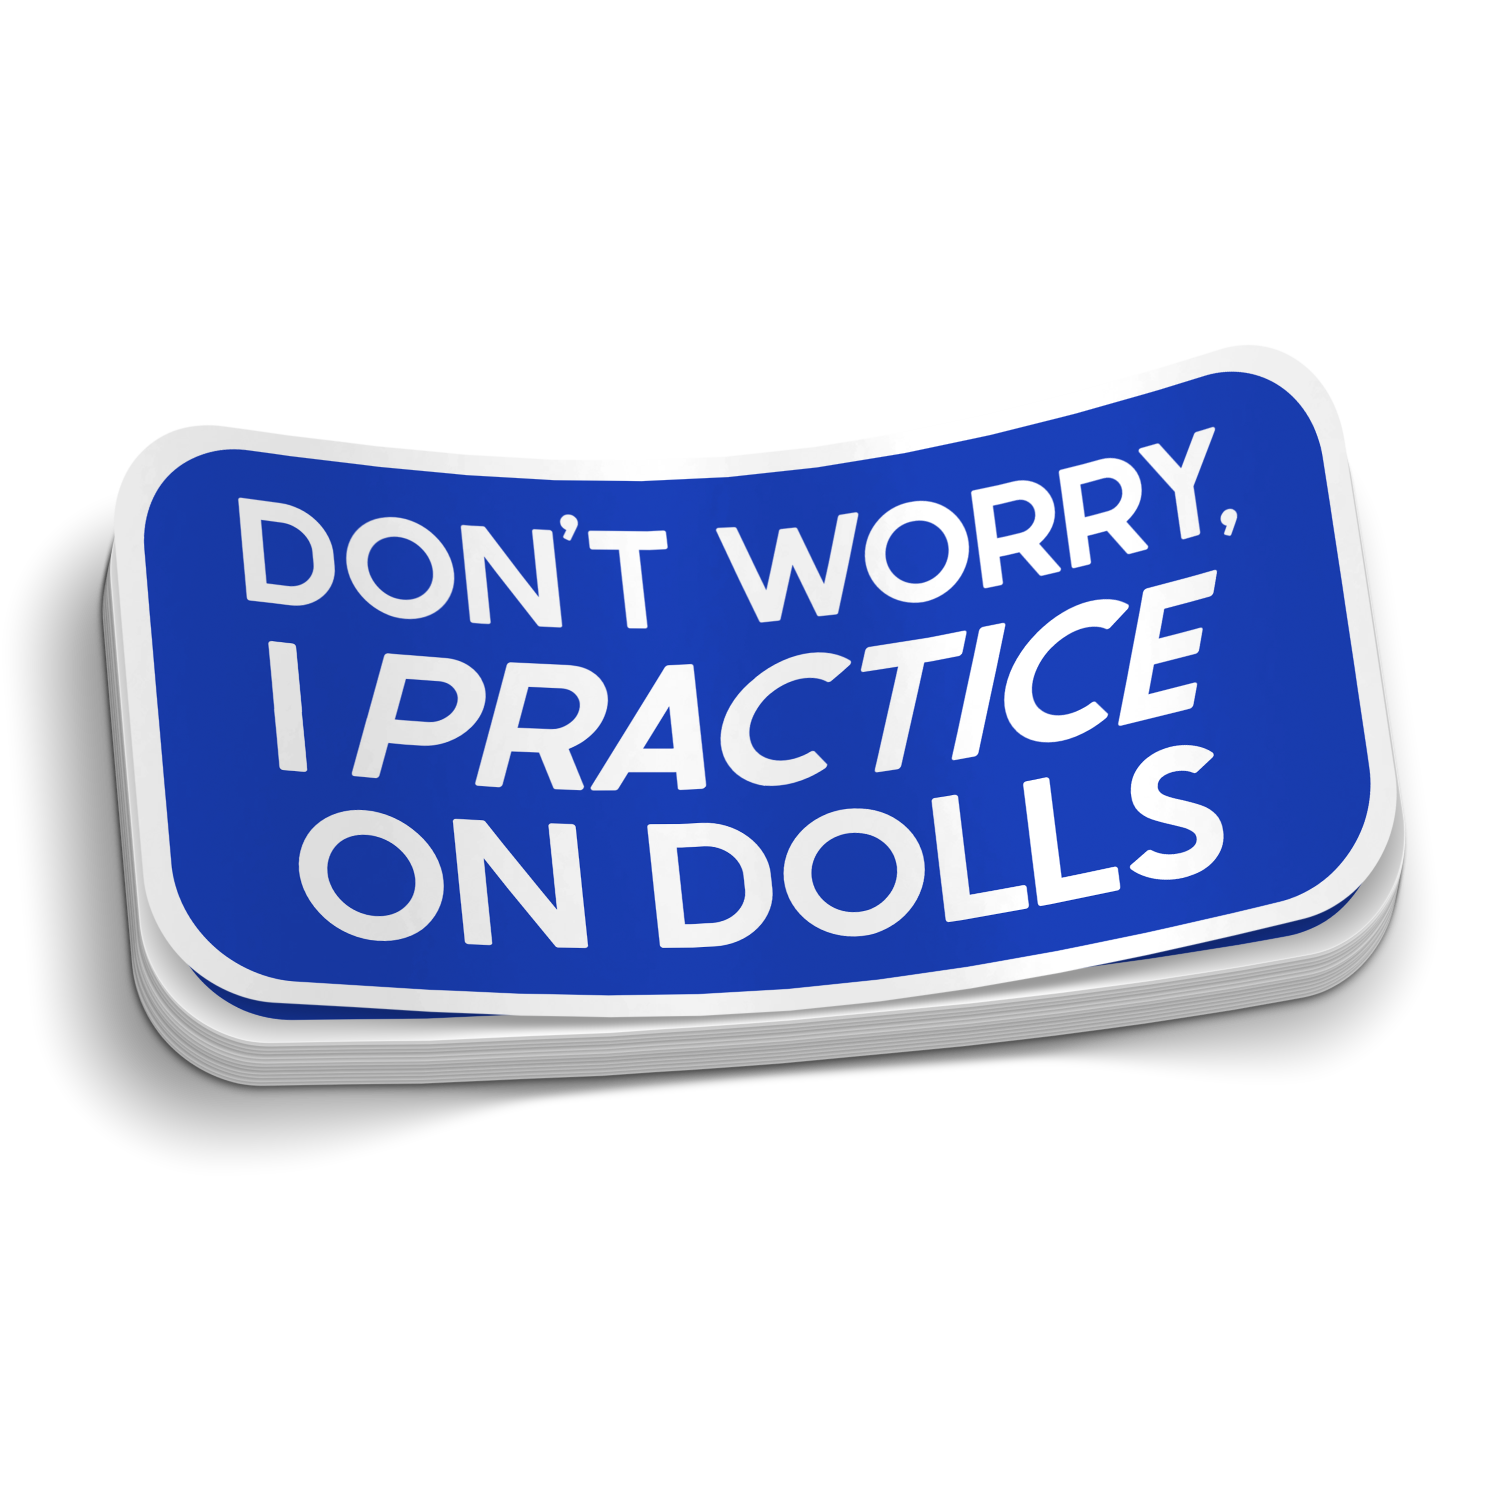 I Practice On Dolls Sticker